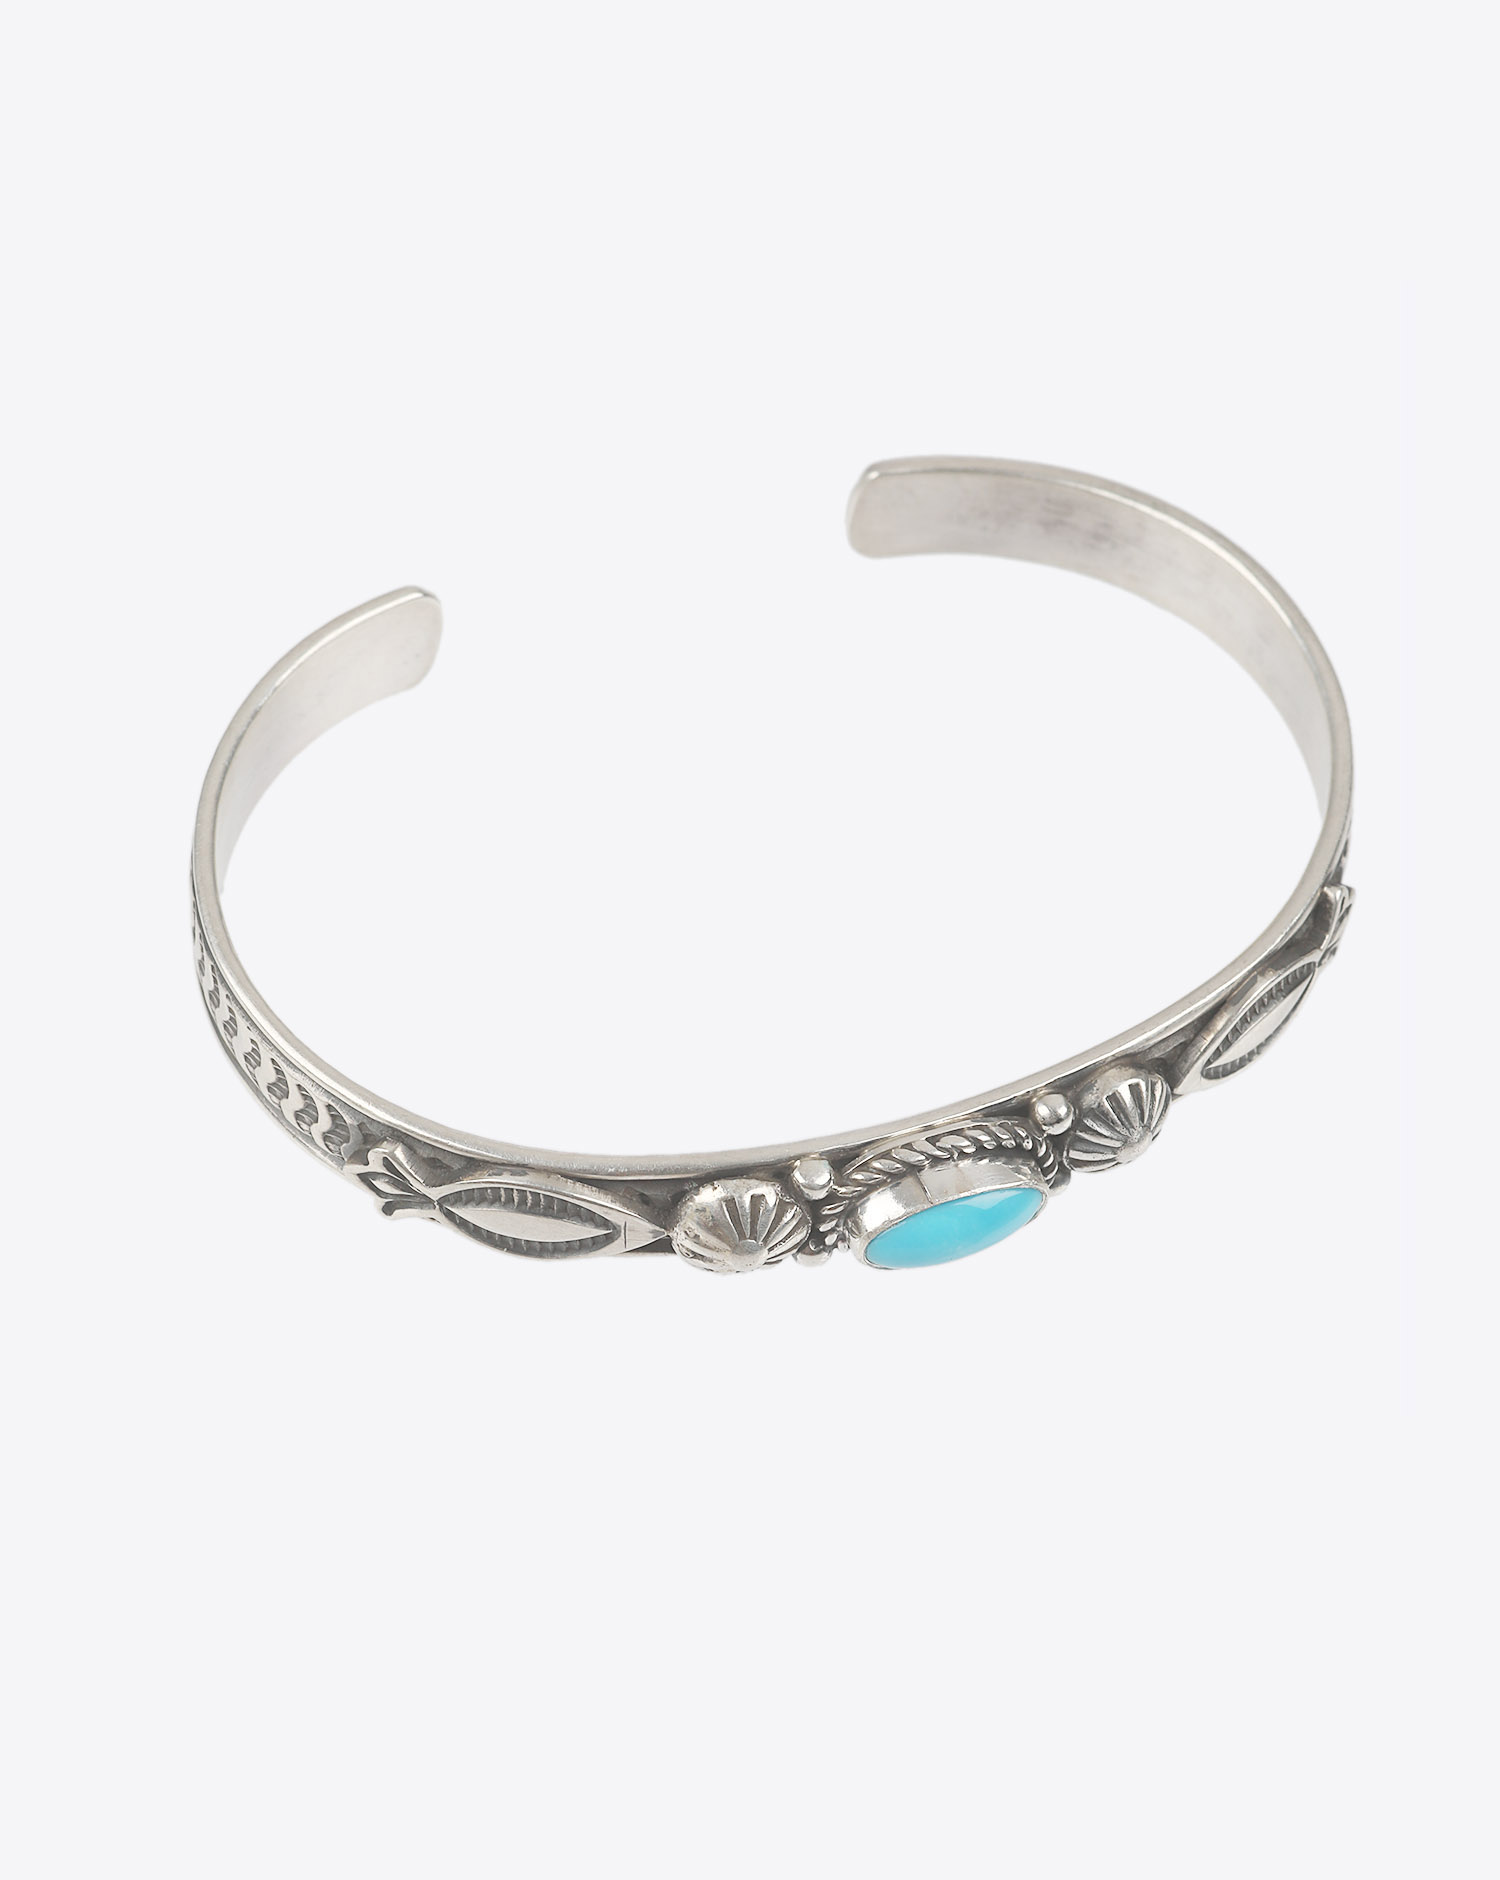 Sleeping Beauty Turquoise Bracelet | Breathe Autumn Rain Artisan Jewelry –  Breathe Autumn Rain Jewelry